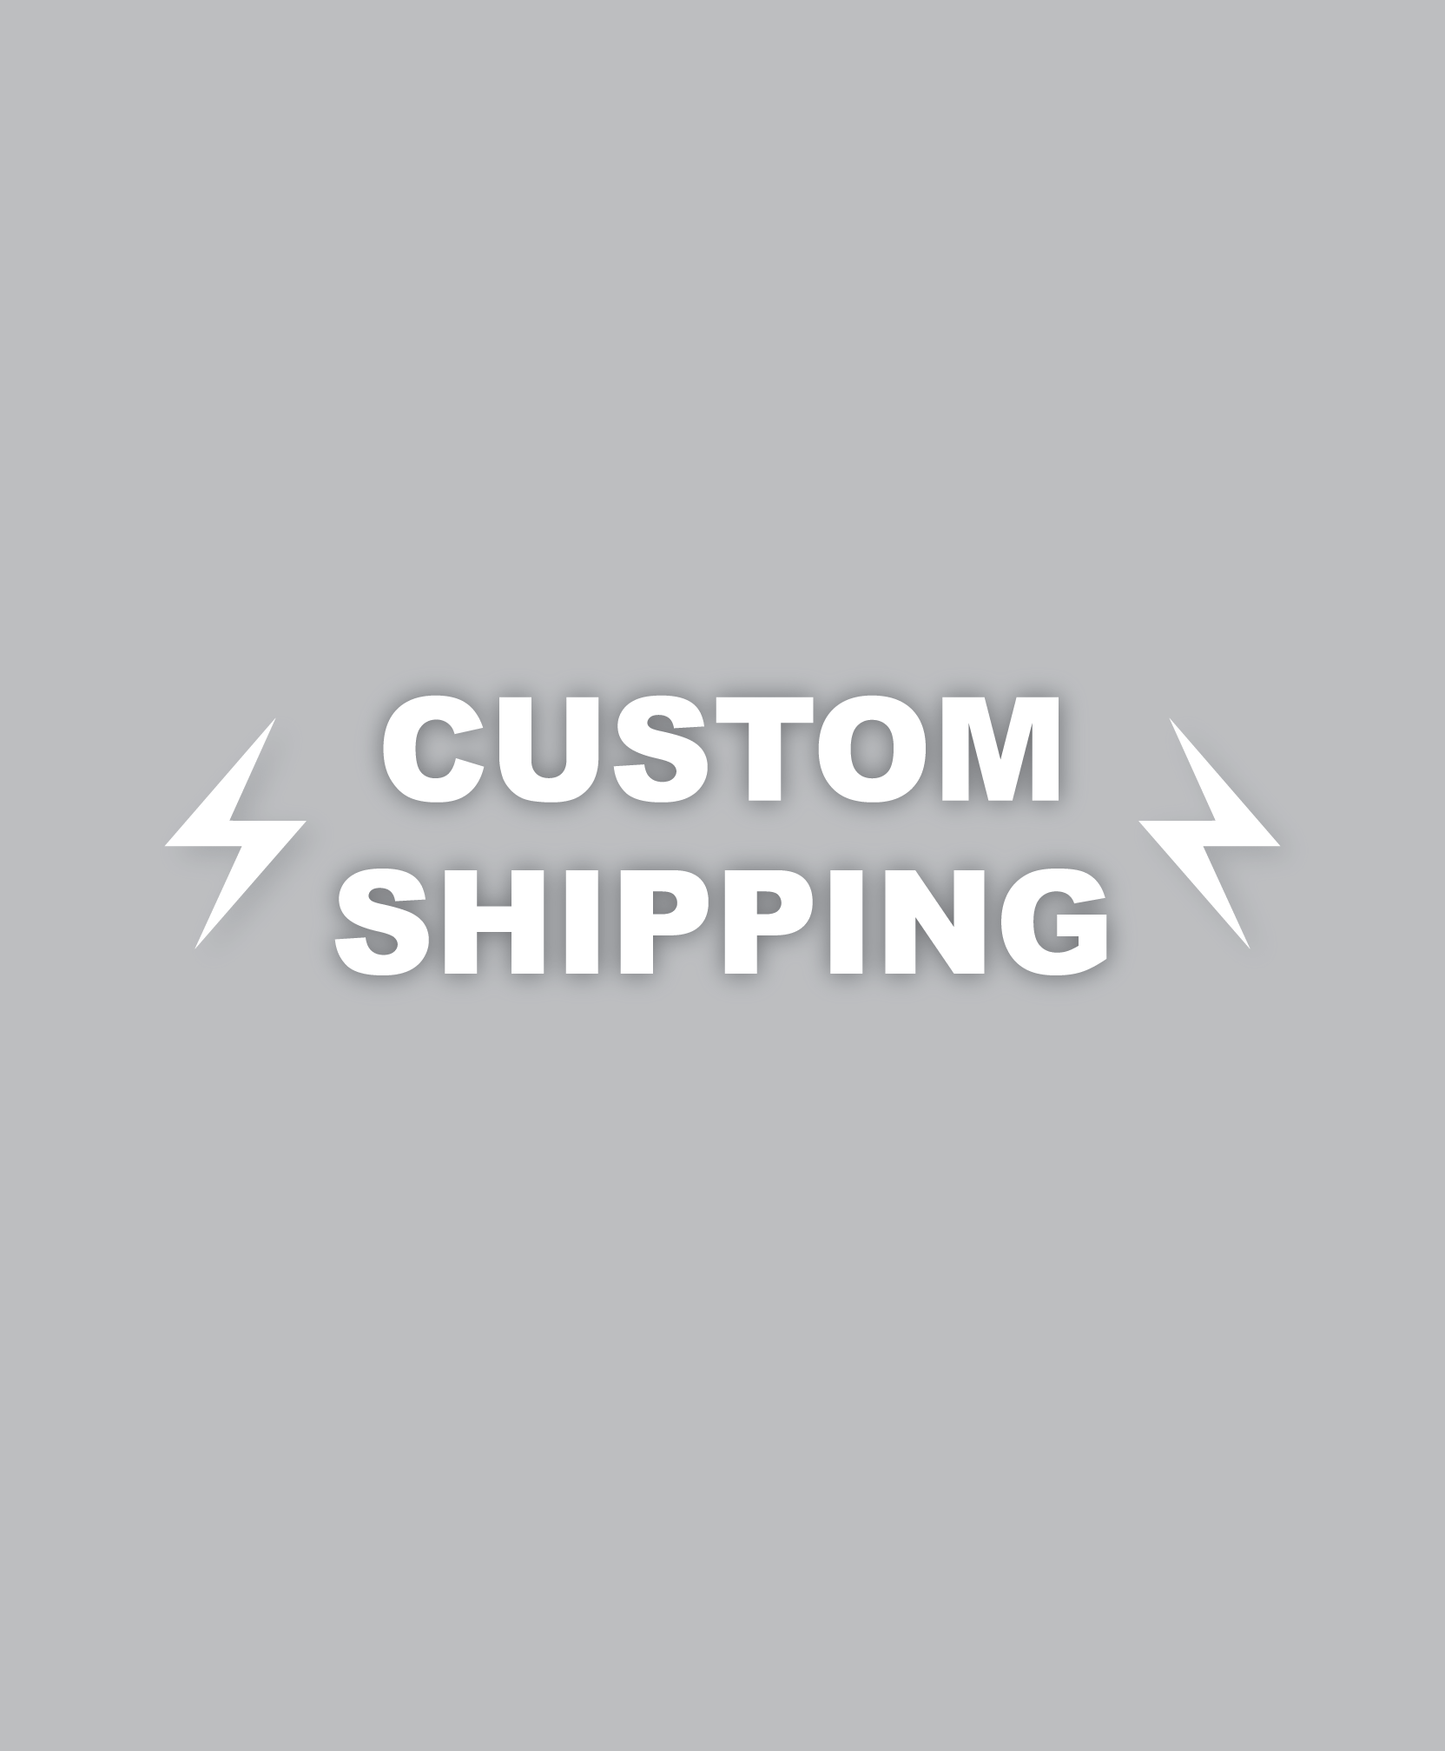 Installation & Custom Shipping